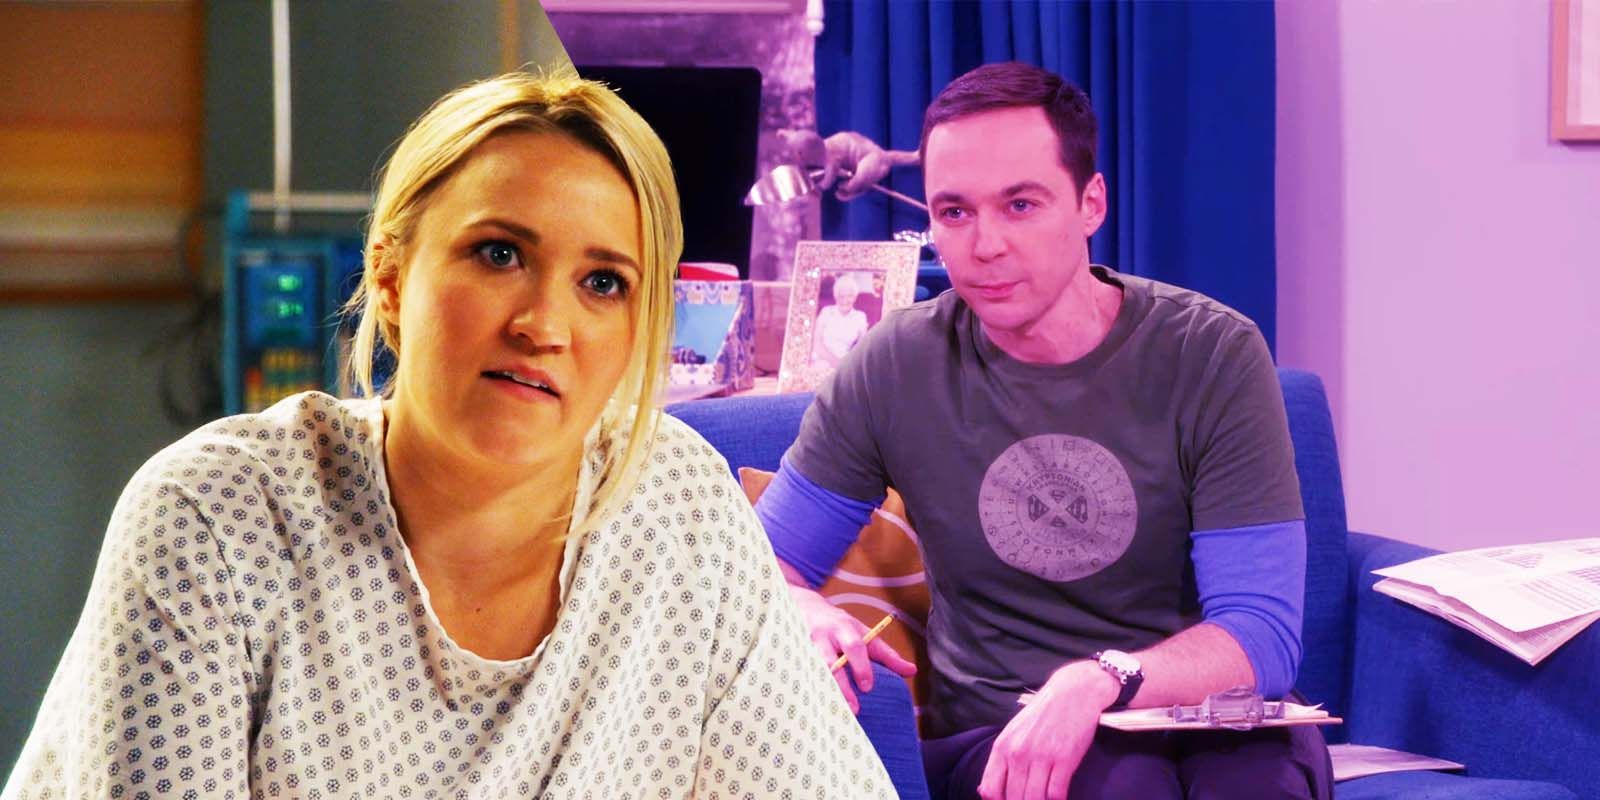 Emily Osment as Mandy in Young Sheldon season 6 and Jim Parsons as Sheldon in The Big Bang Theory season 11